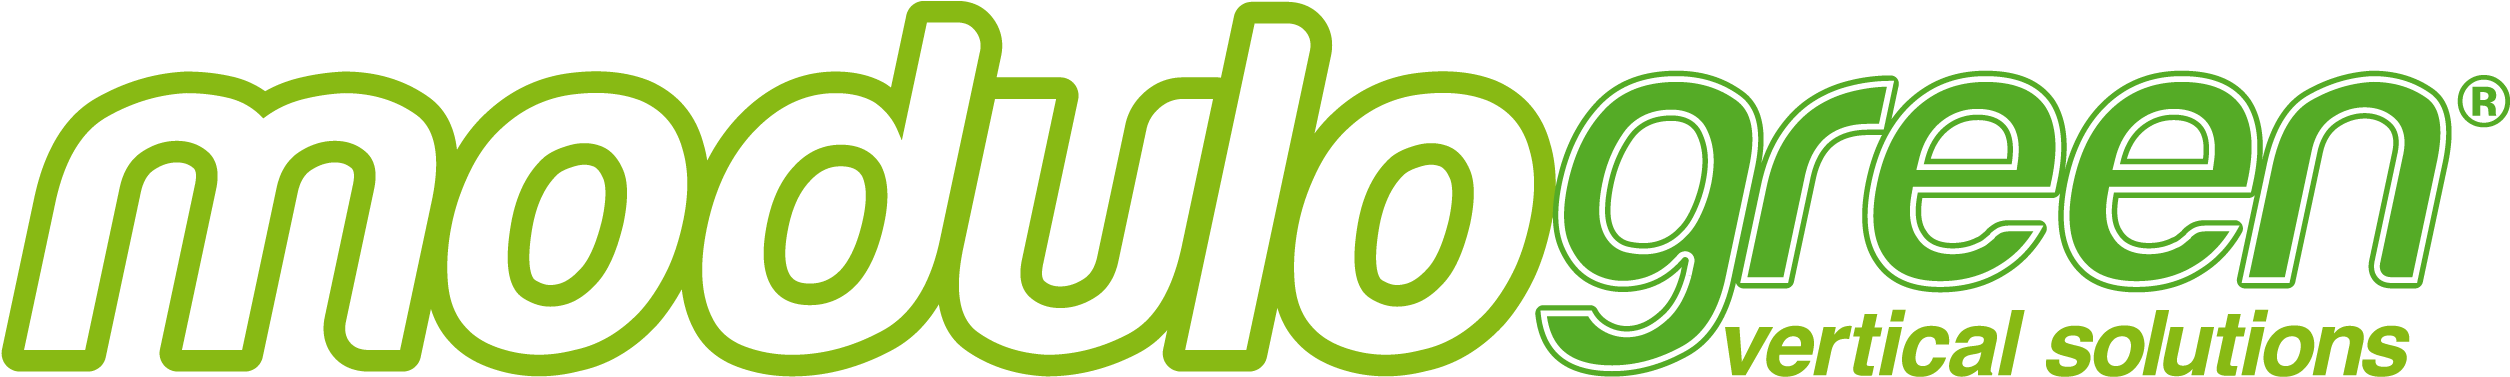 Modulogreen Logo - Web Solutions (2509x383)